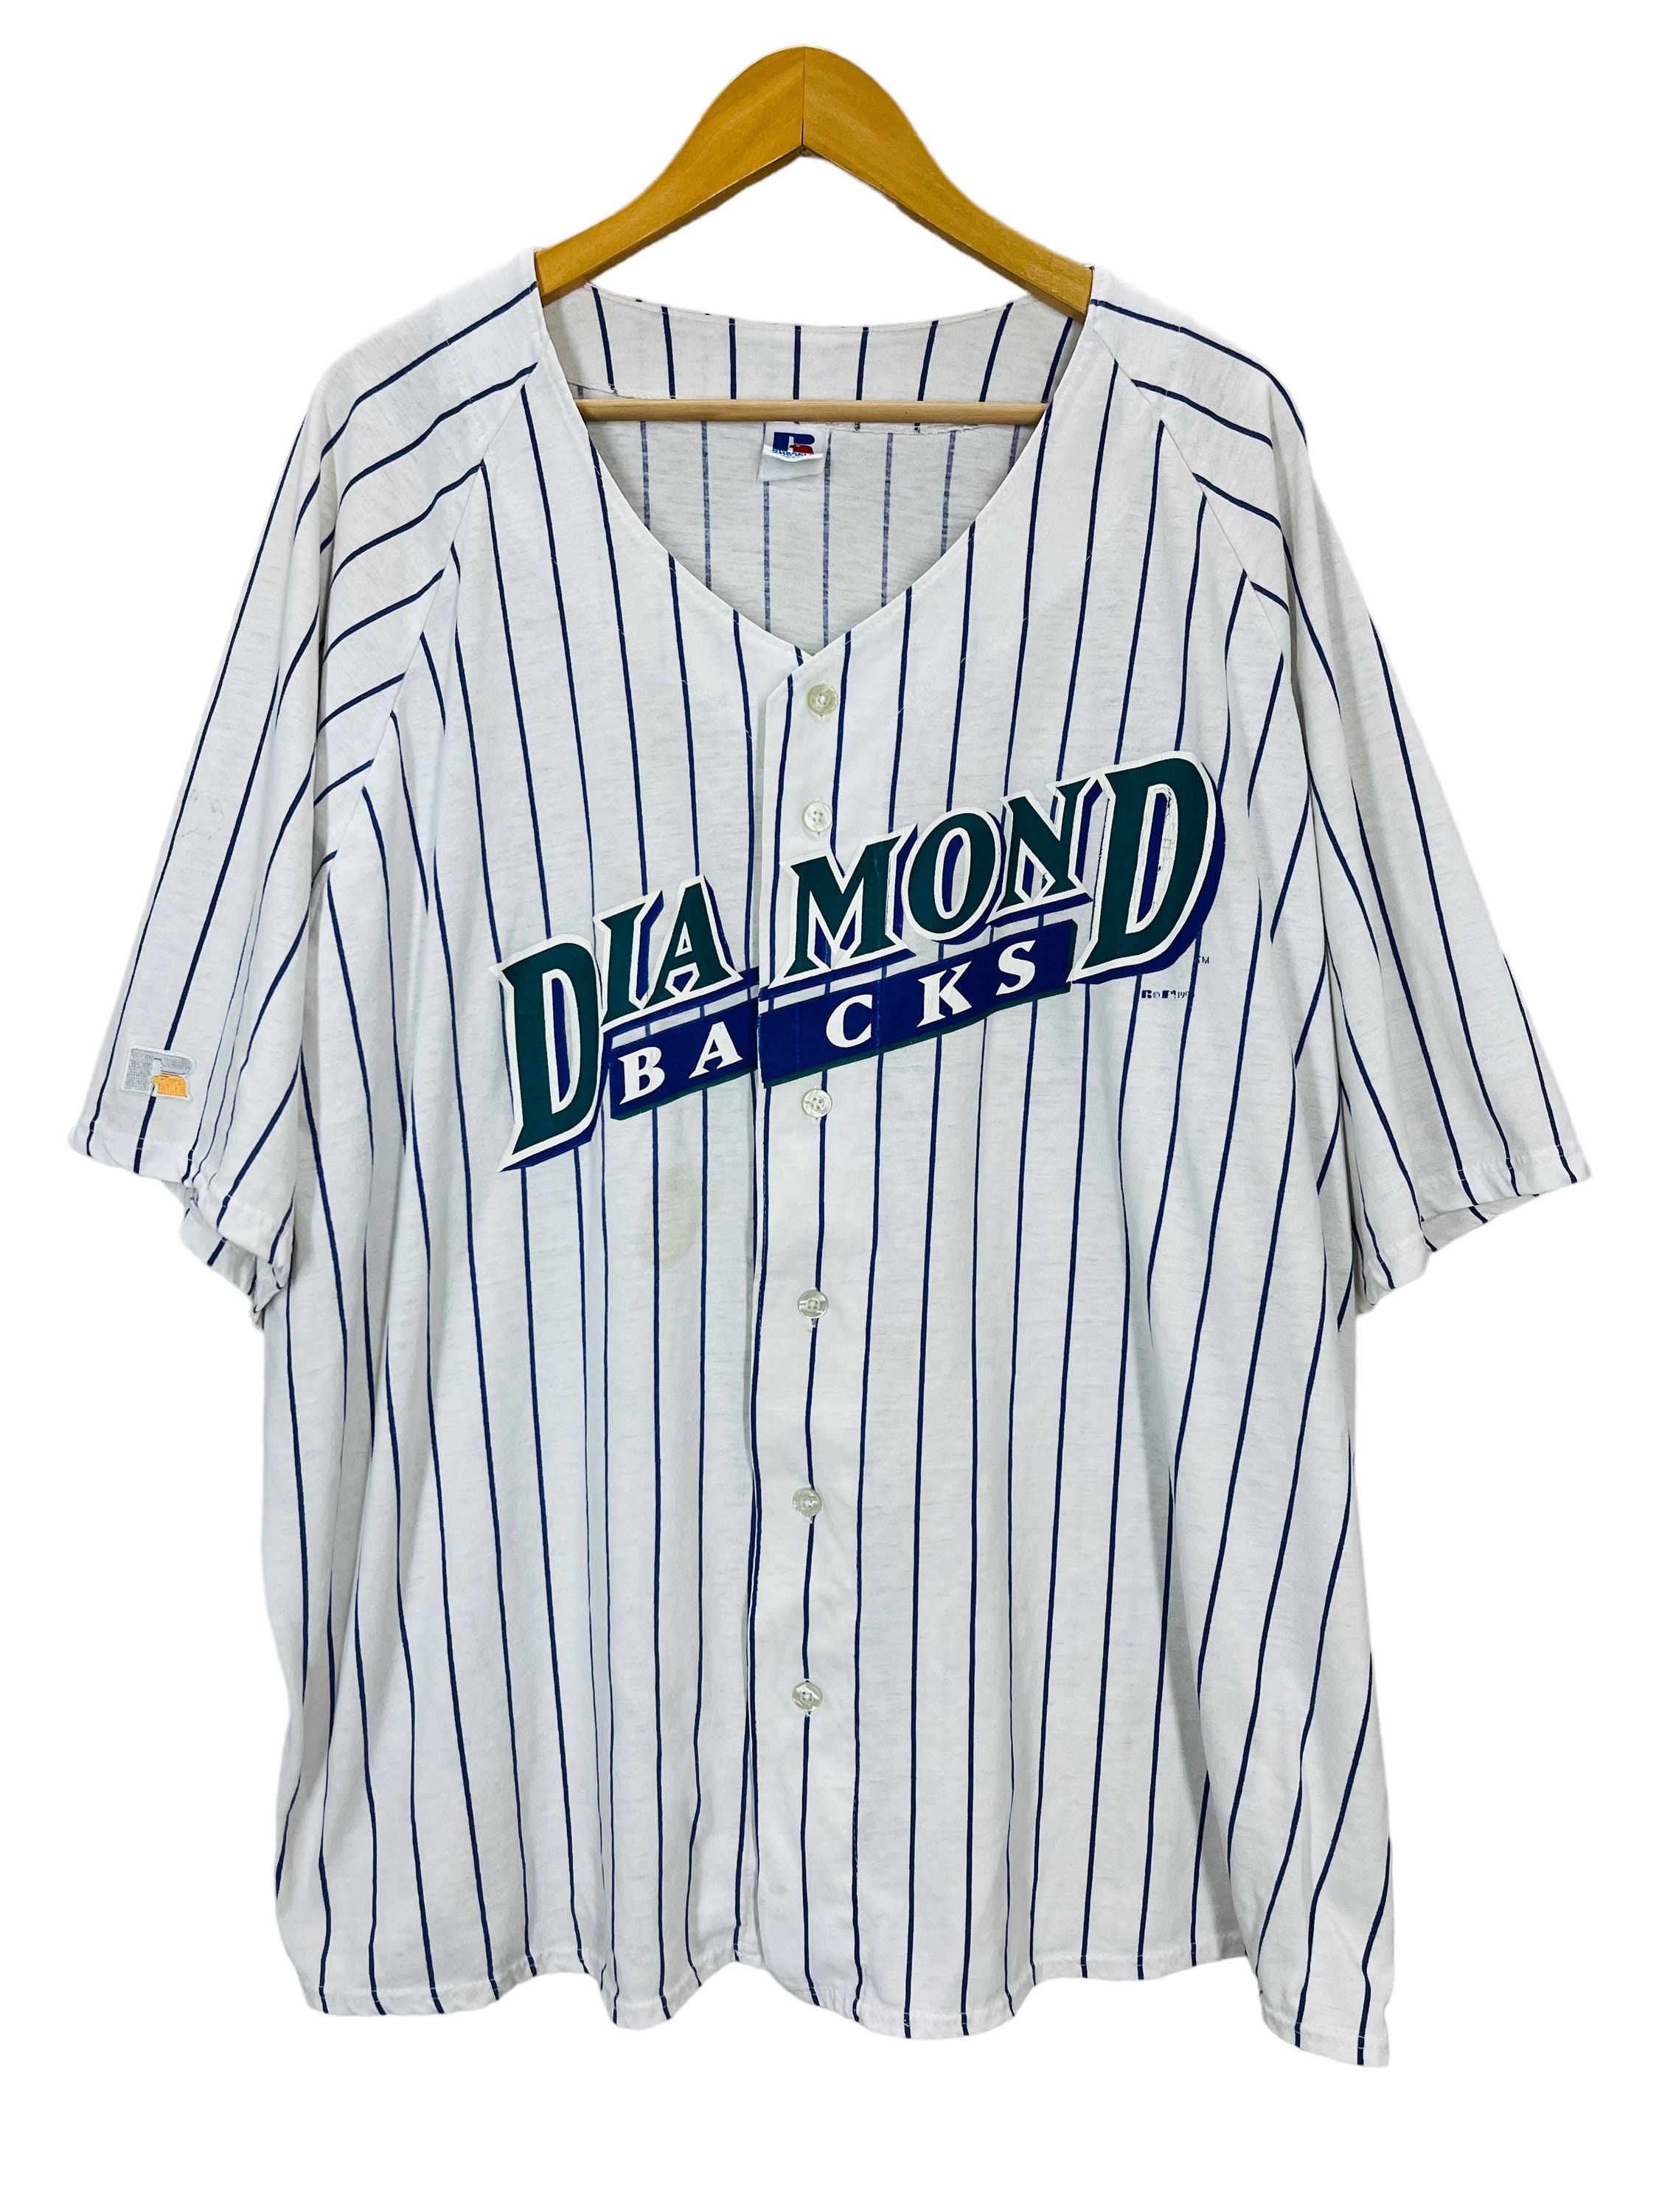 Randy Johnson #51 Arizona Diamondbacks MLB 2000 All Star game Majestic  Jersey XL